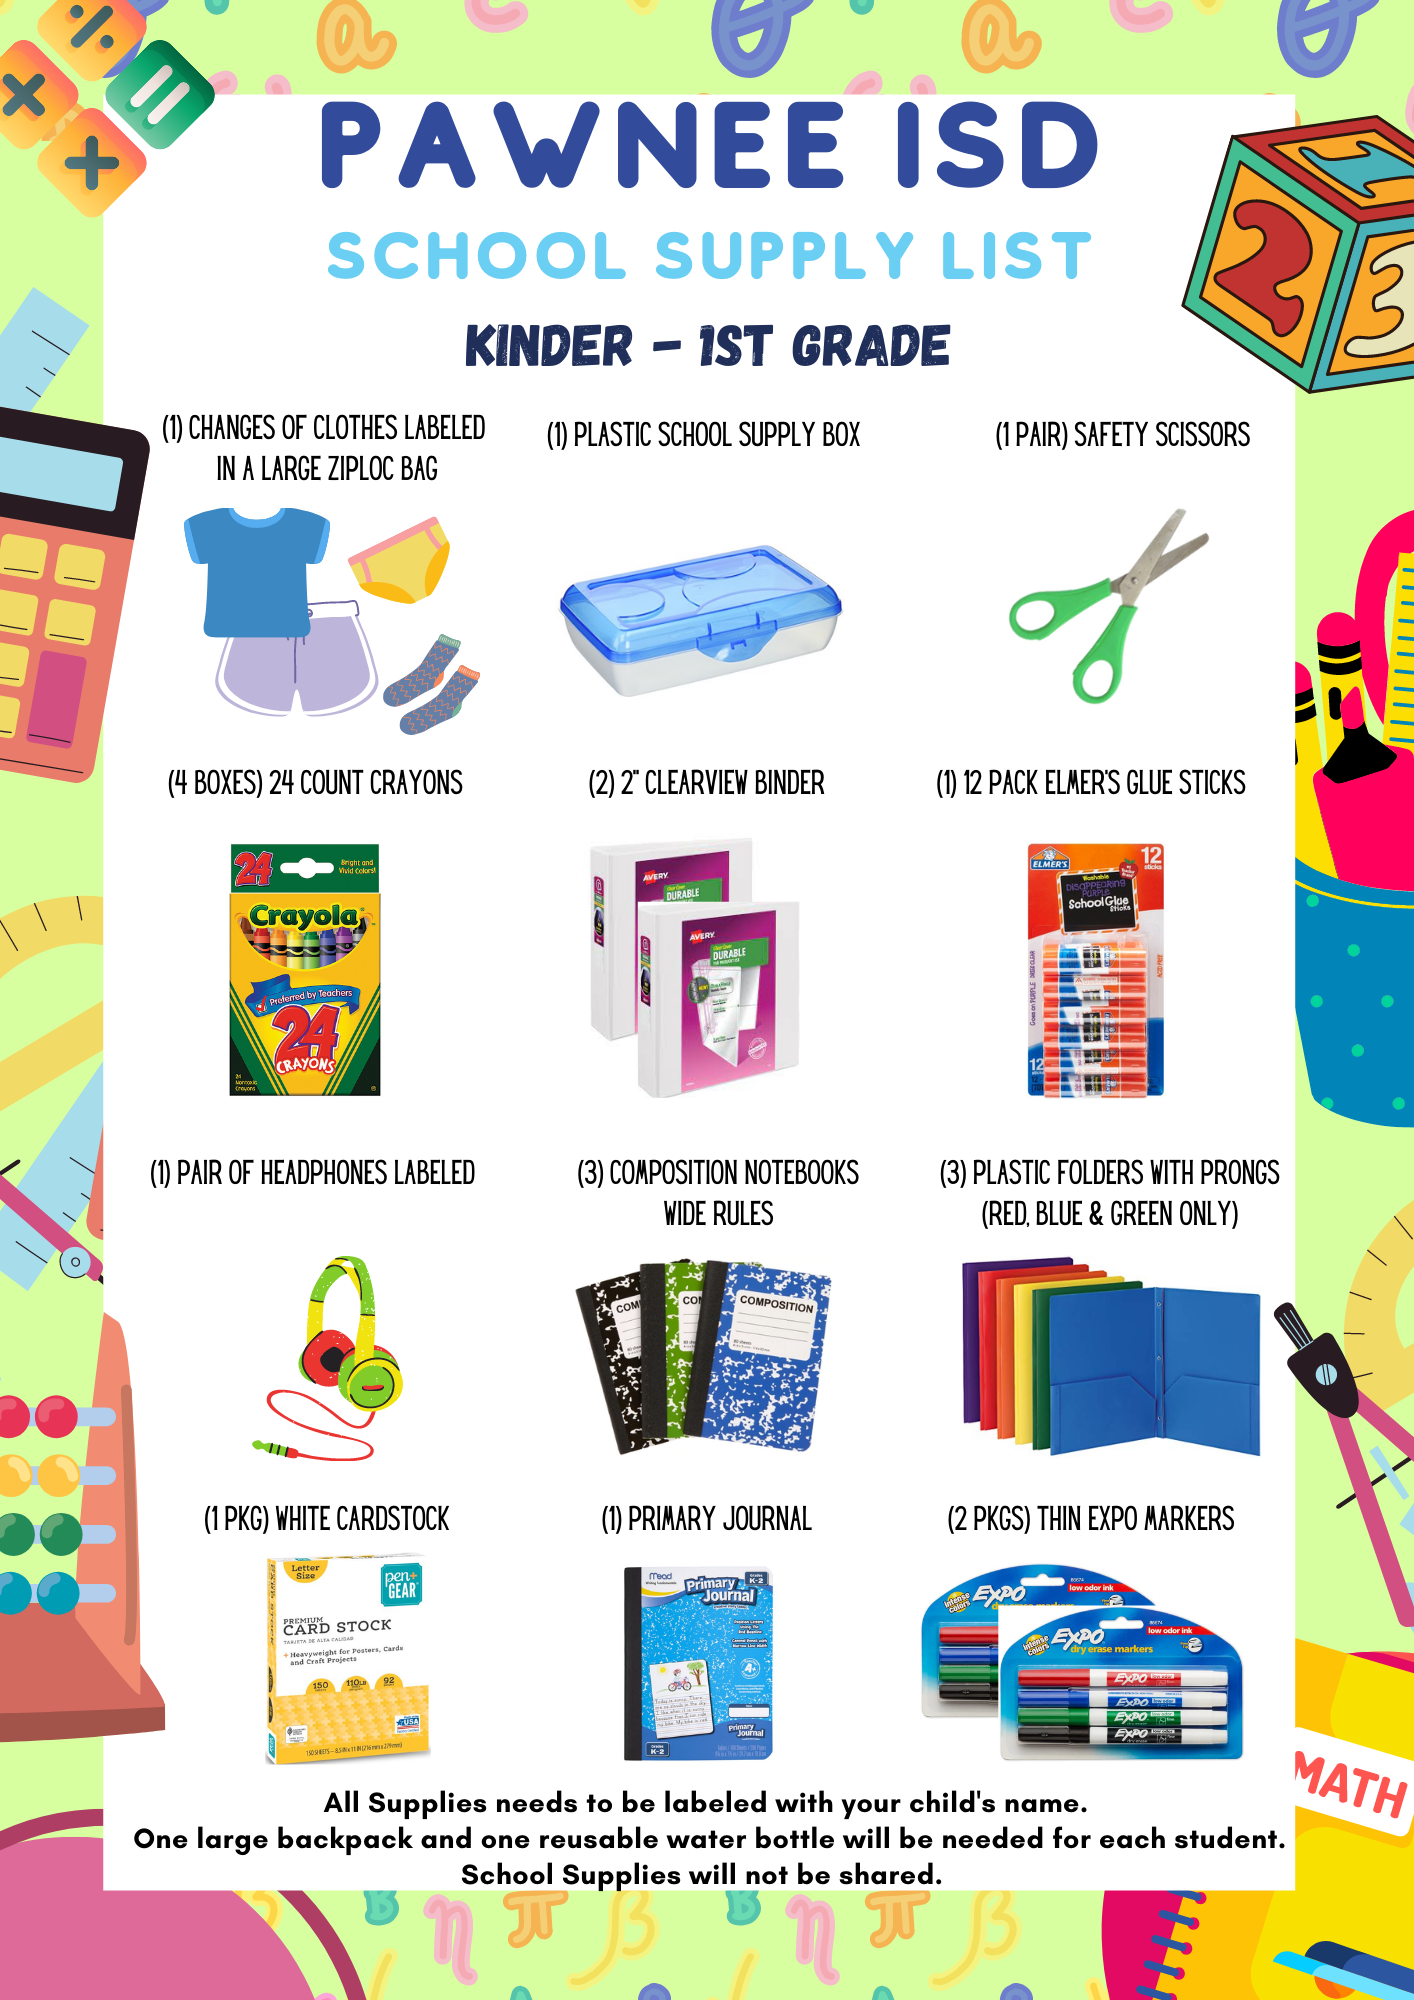 Kinder-1st Grade School Supplies